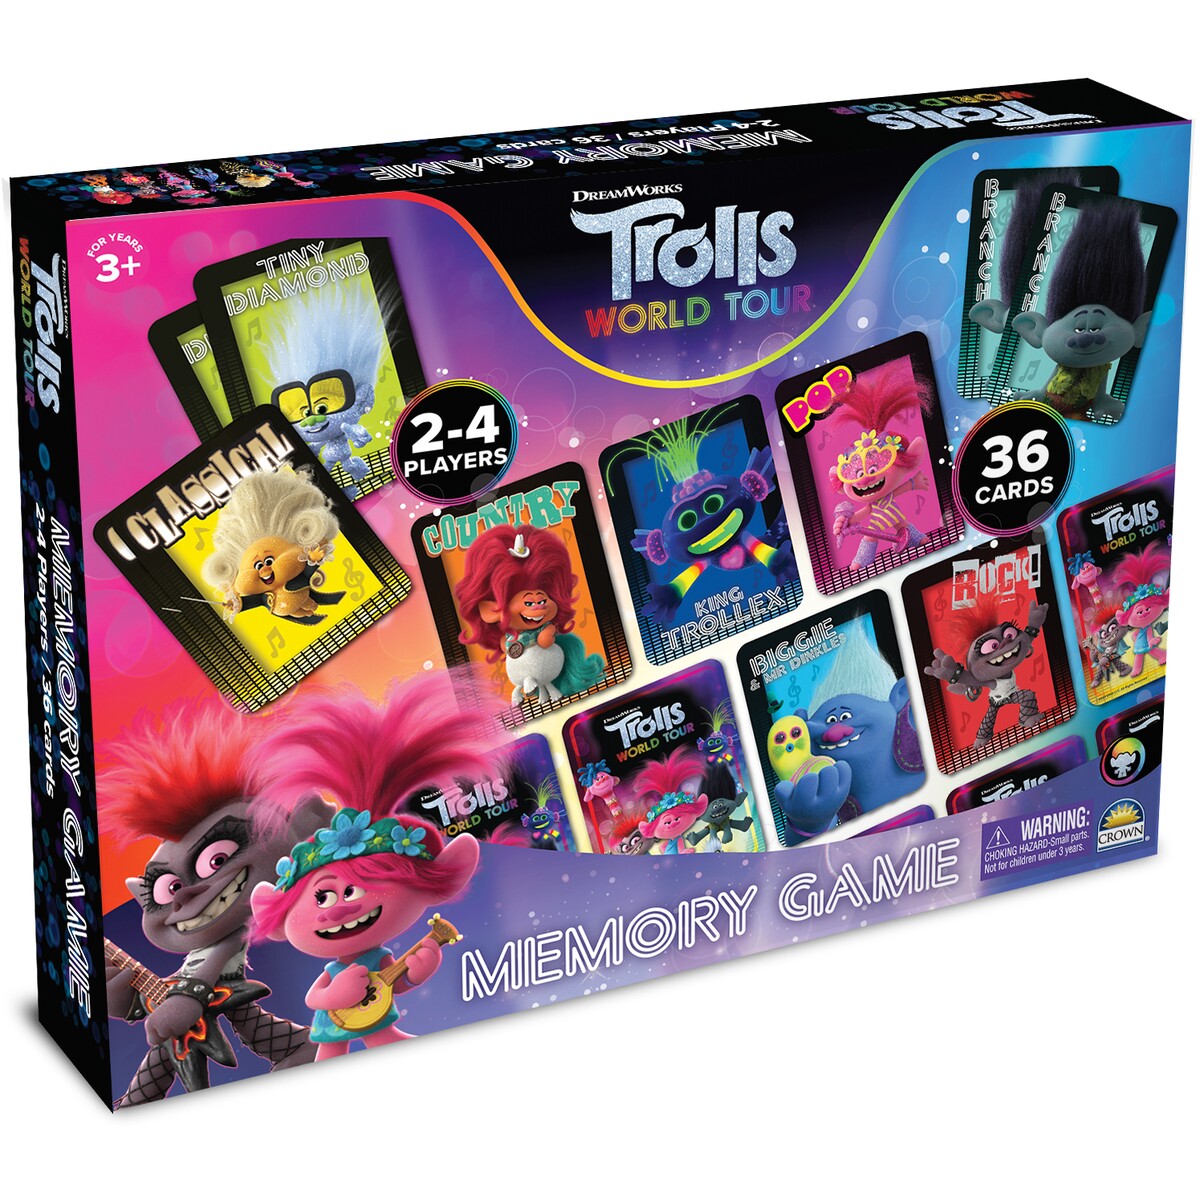 TROLLS 2 MEMORY GAME